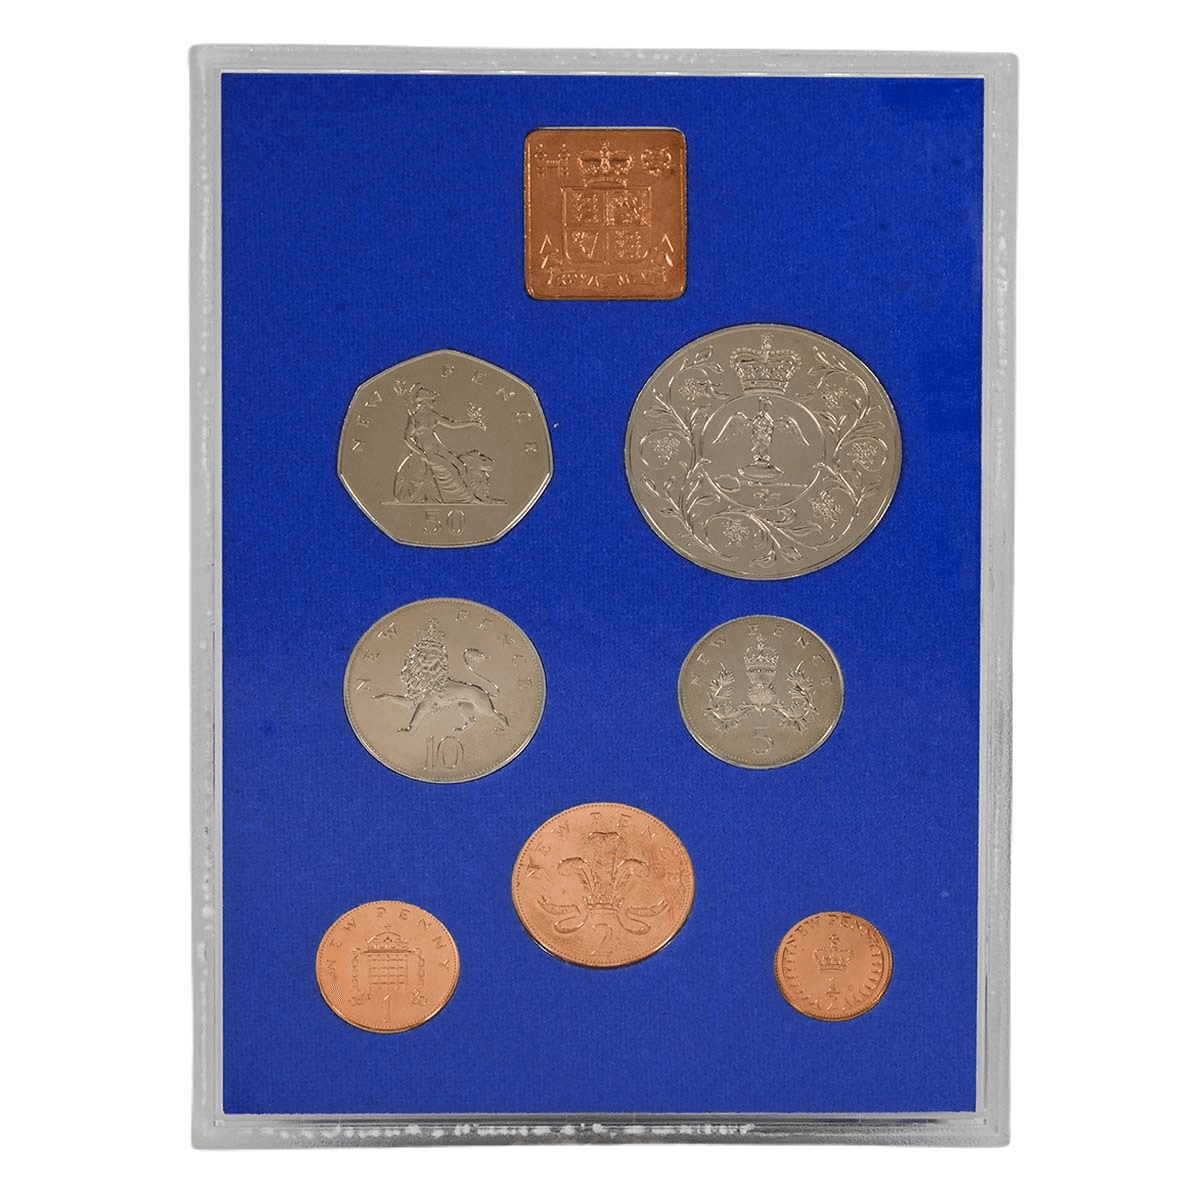 1977 UK Proof Annual 7 Coin Set - Silver Jubilee of Queen Elizabeth II - Loose Change Coins